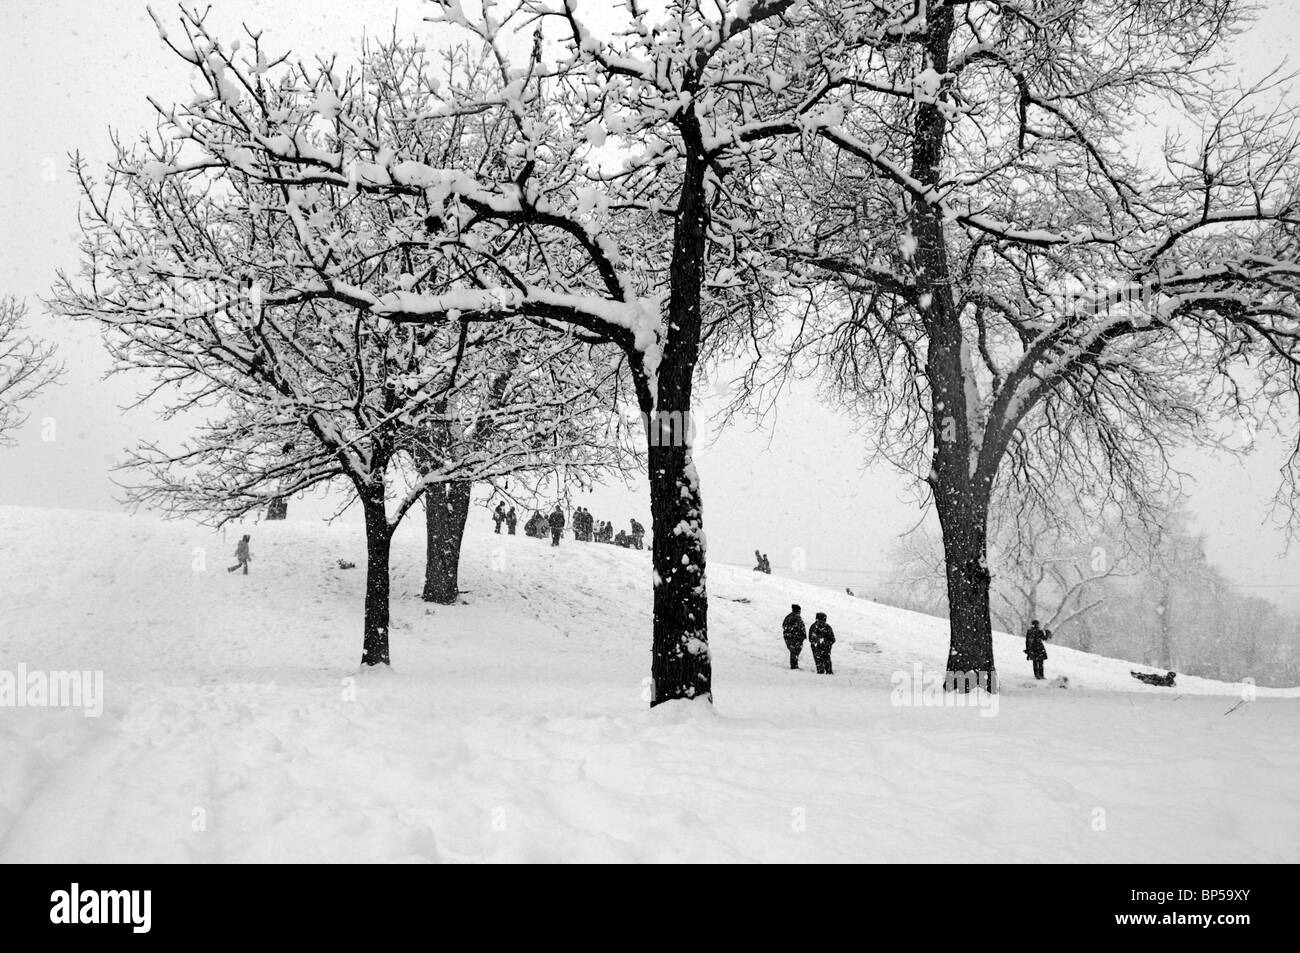 Winter wonderland scenes from a record snowfall in Dallas, Texas USA Stock Photo